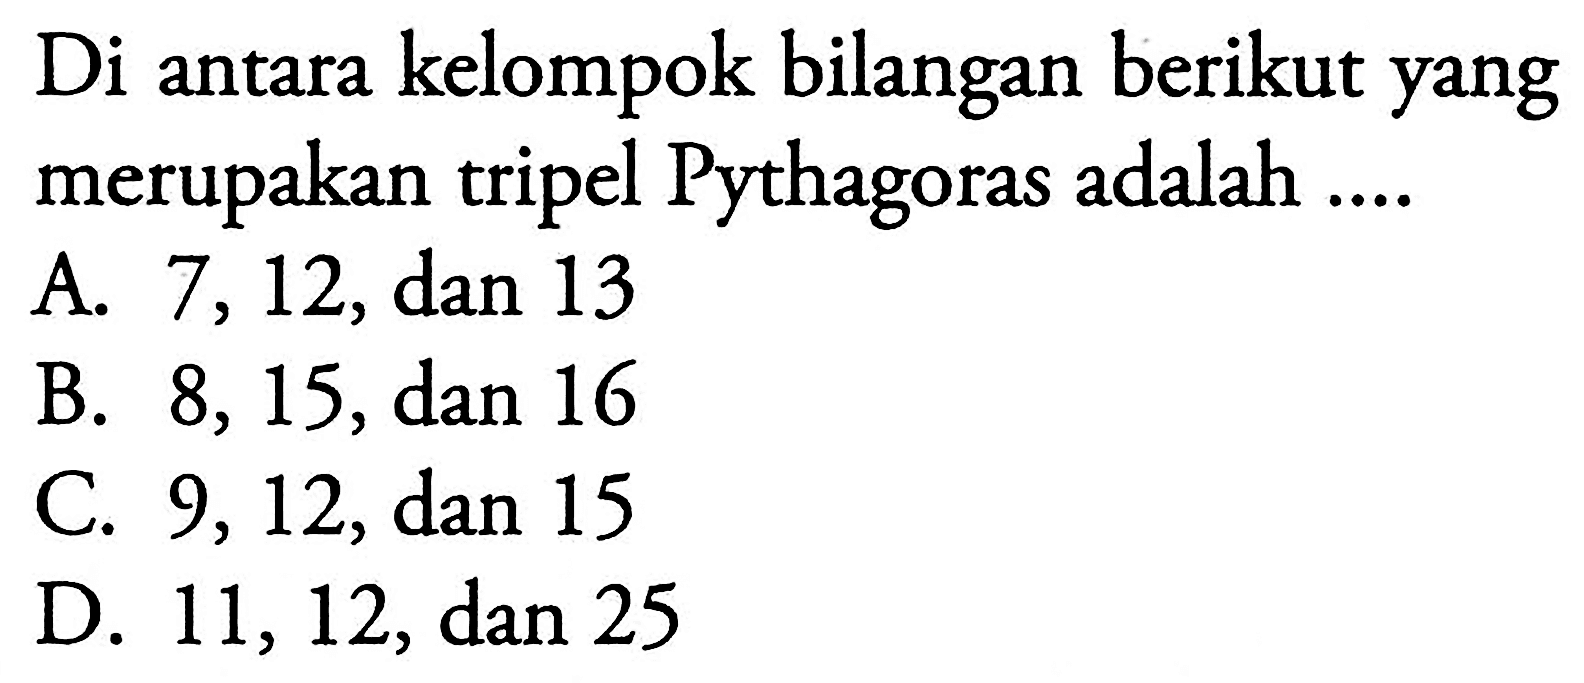 Di antara kelompok bilangan berikut yang merupakan tripel Pythagoras adalah .... A. 7,12, dan 13 B. 8,15, dan 16 C. 9,12, dan 15 D. 11,12, dan 25